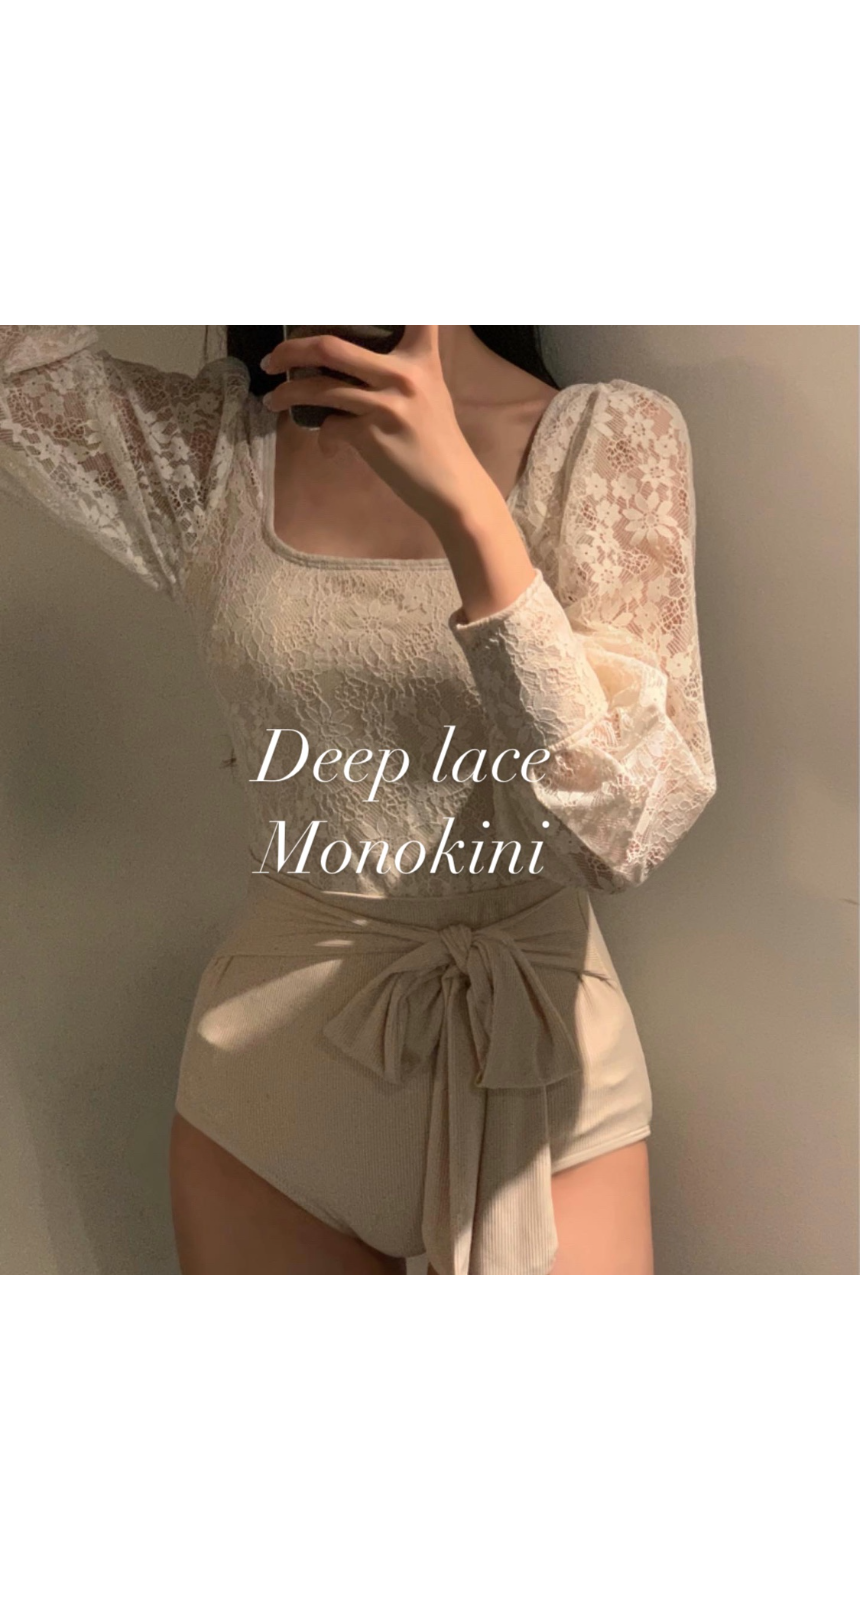 Deep lace Monokini